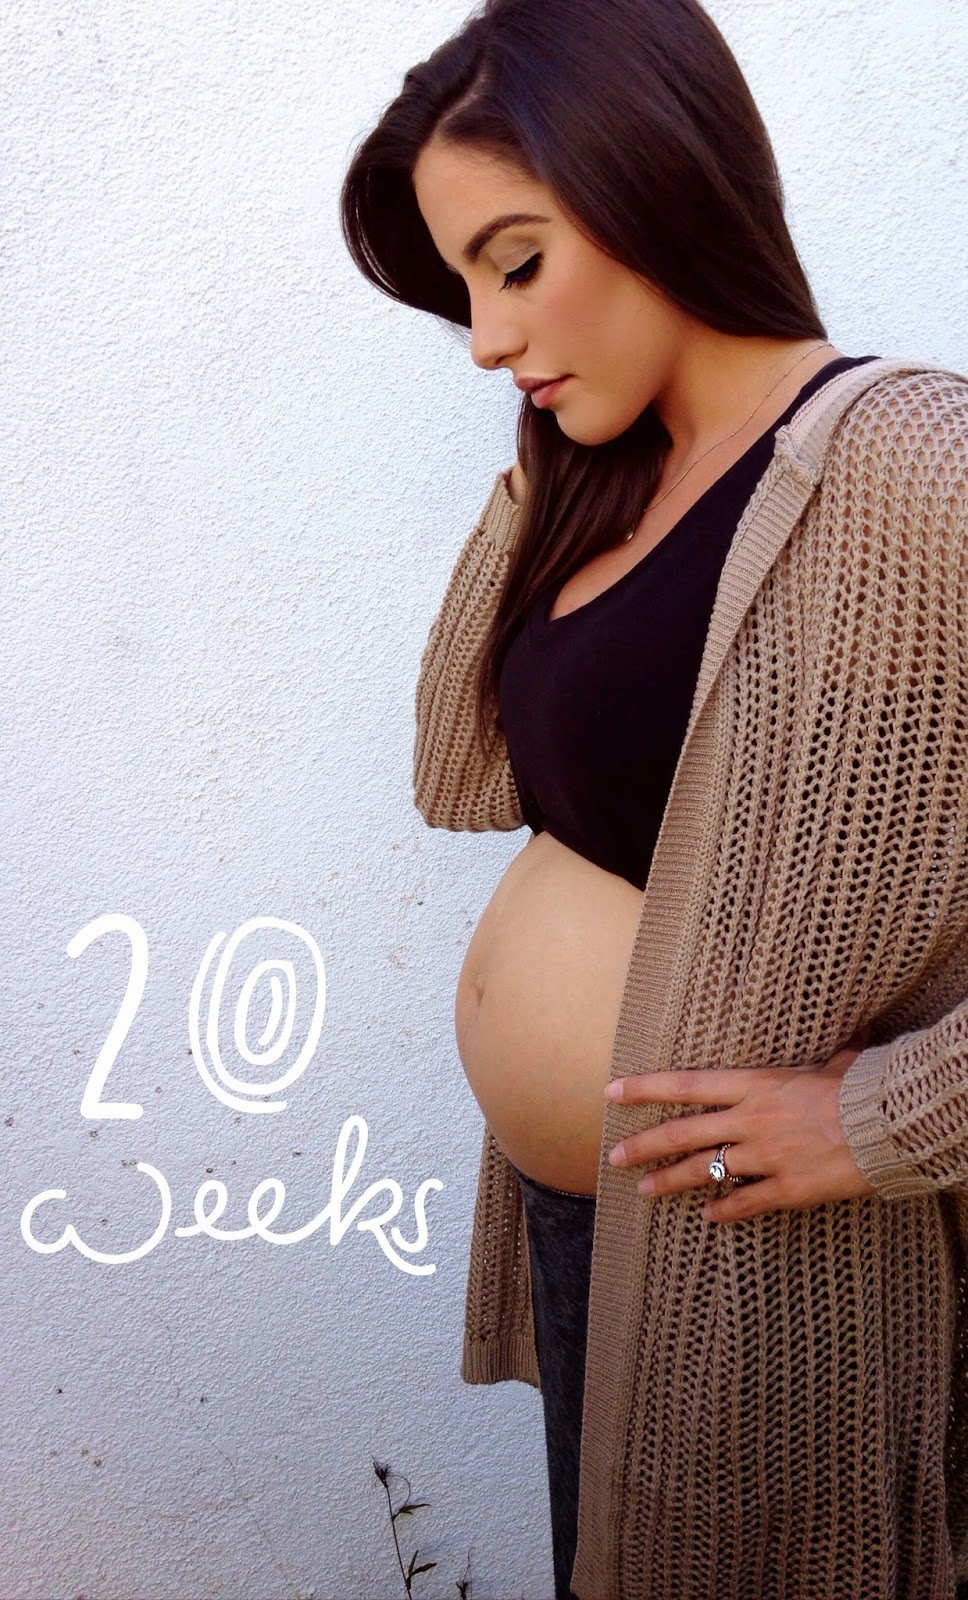 Zackandsydney 20 Weeks Pregnant Picture